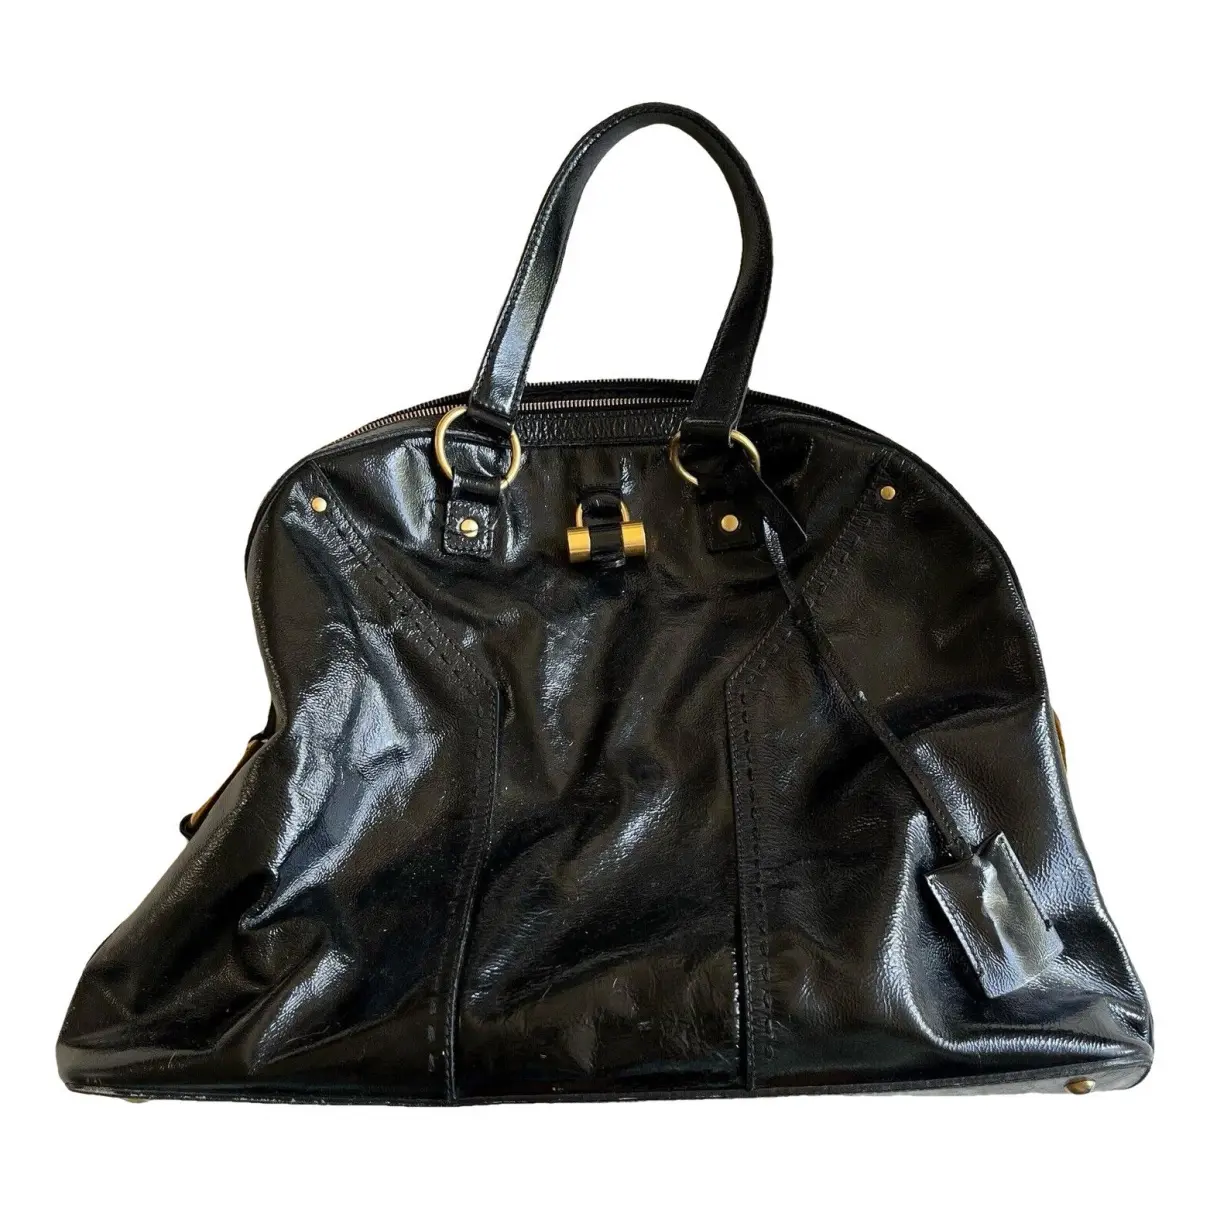 Chyc patent leather handbag